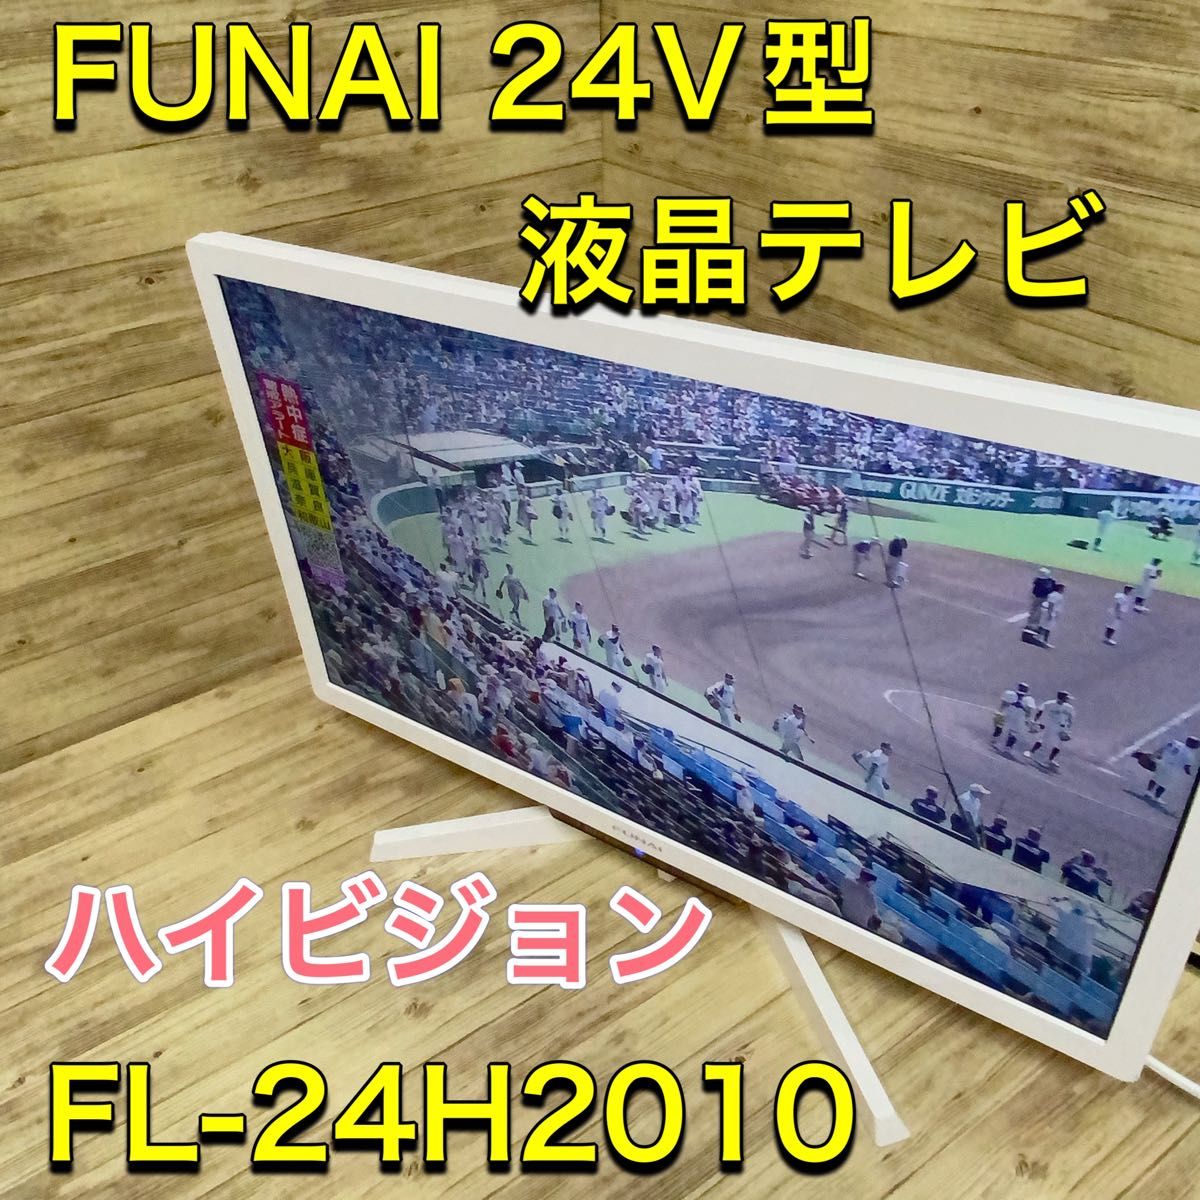 FUNAI フナイ 24V型 ハイビジョン 液晶テレビ FL-24H2010